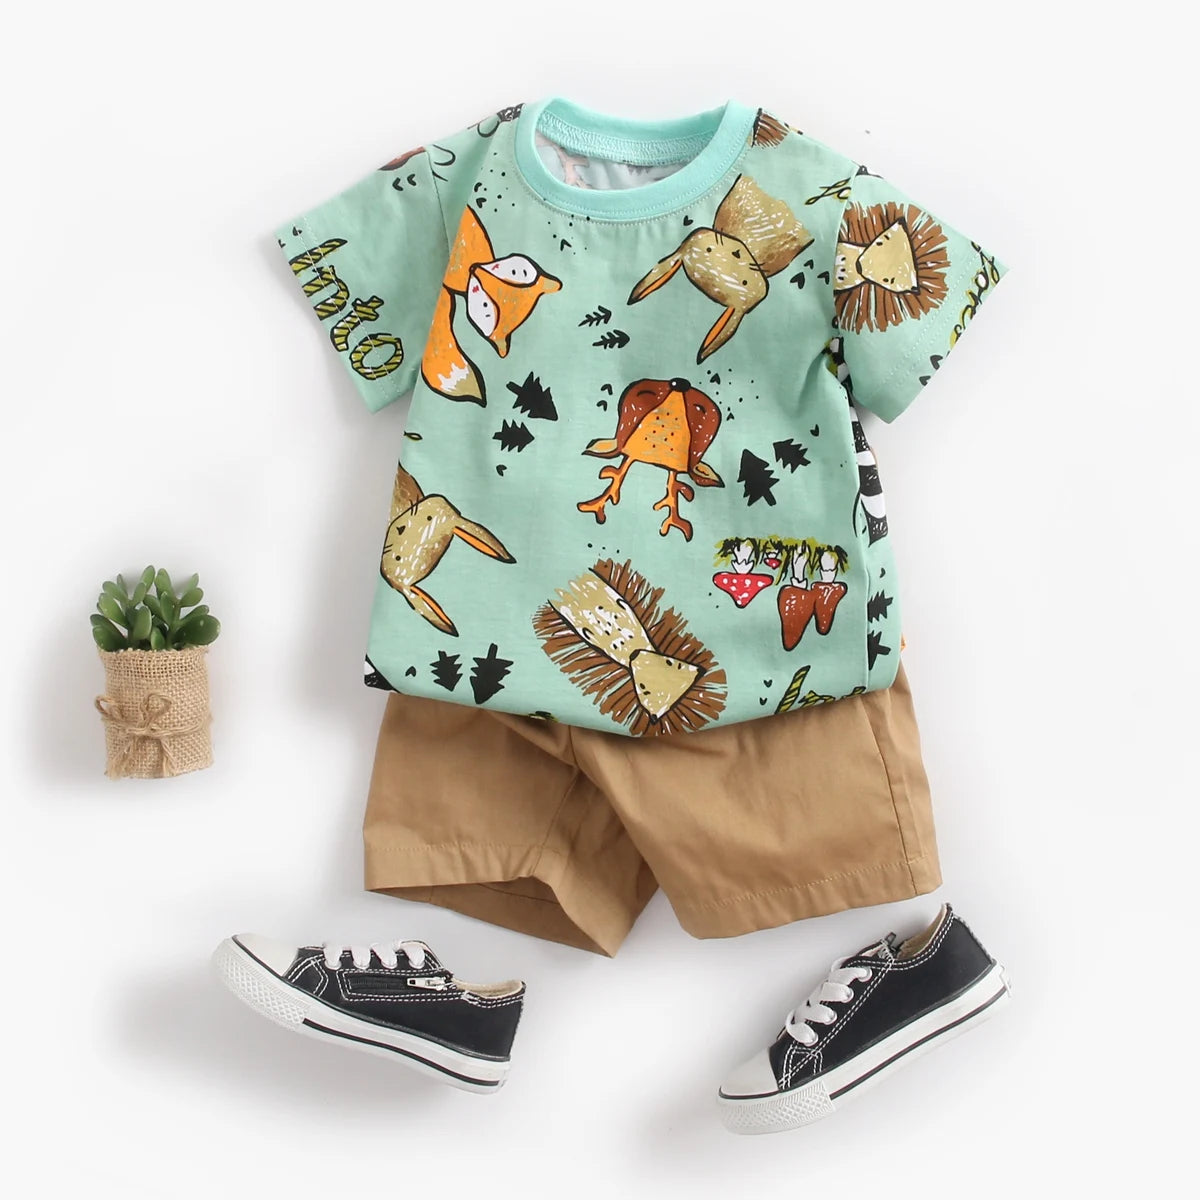 Sanlutoz Baby Boys Summer Clothing Sets Cartoon Short Sleeve Cotton Baby Outfit Sets Shirts + Shorts 2pcs